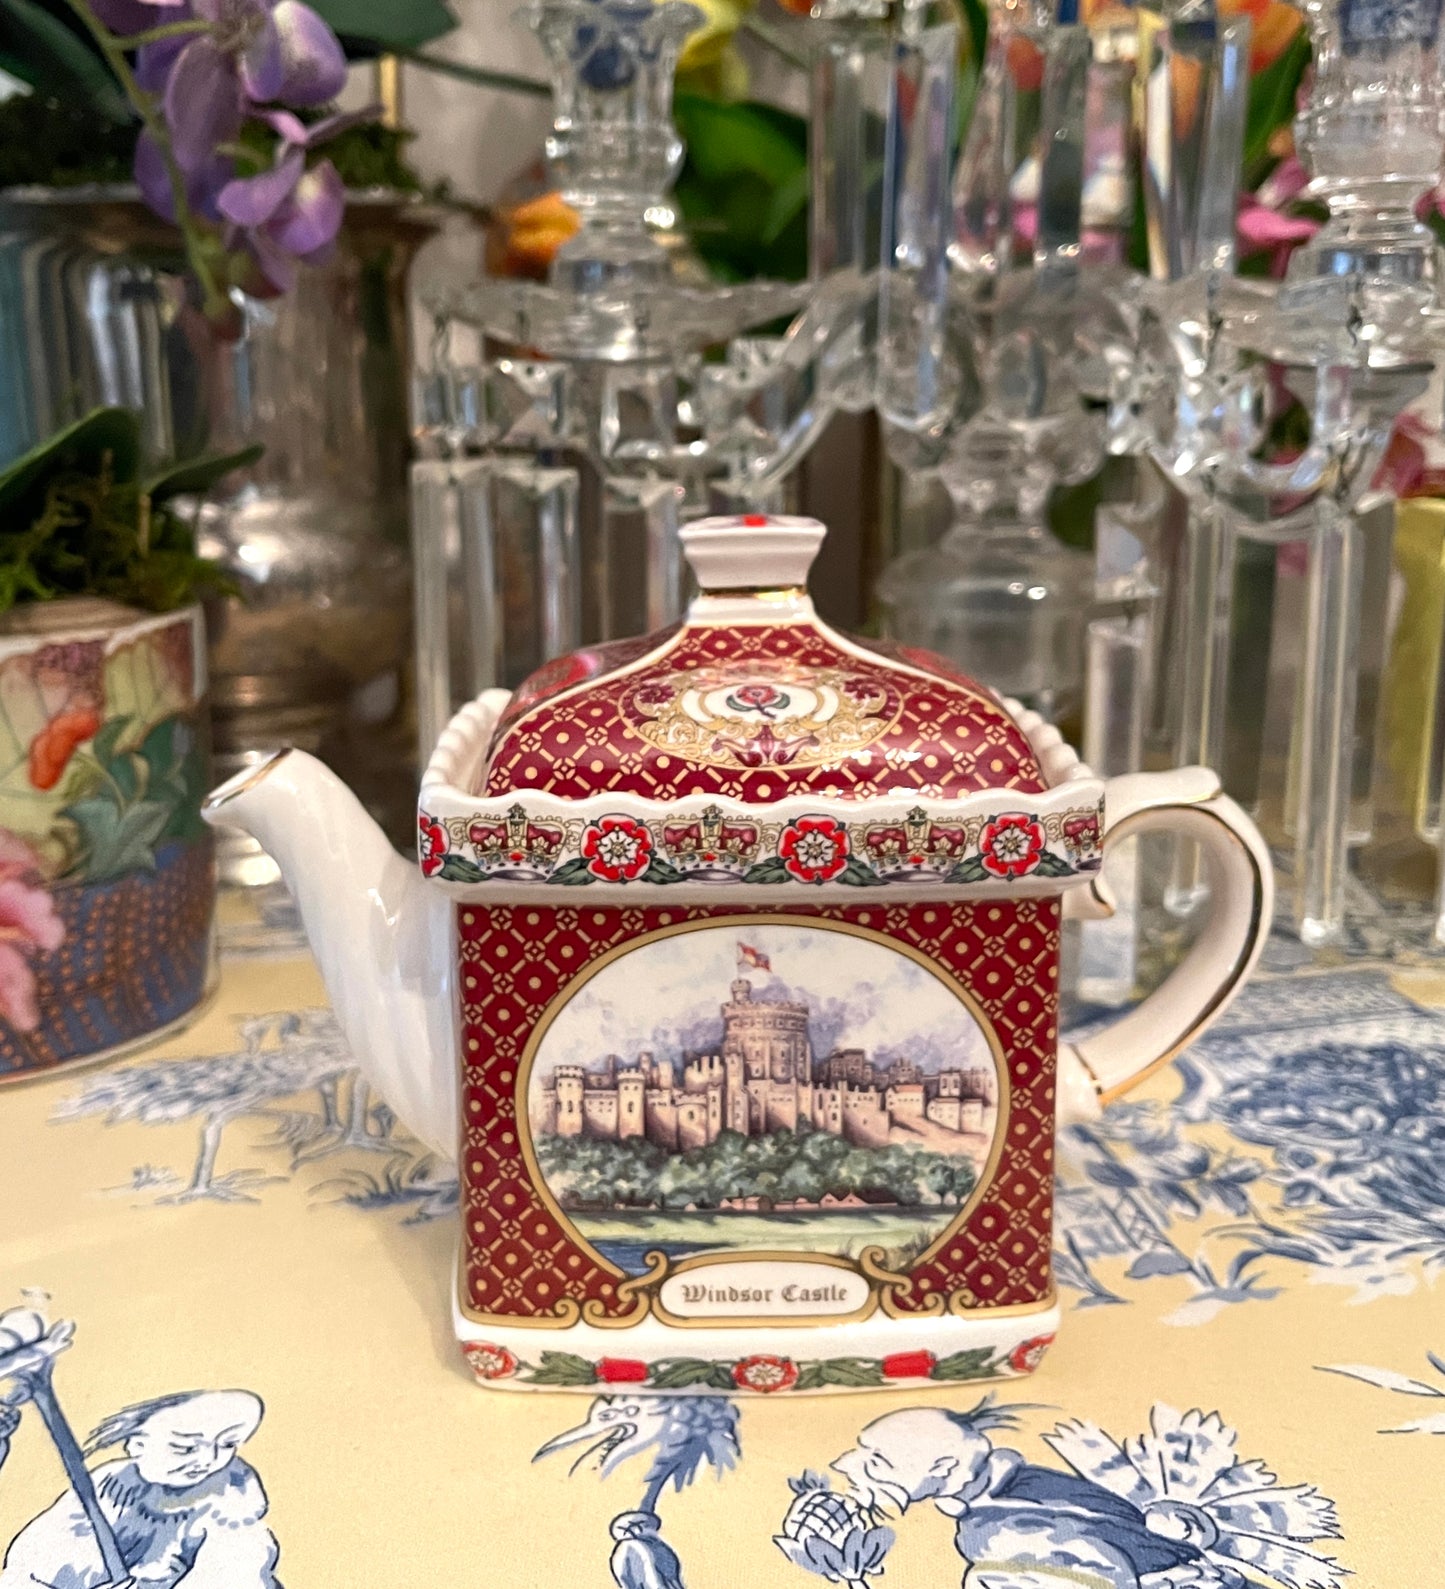 Vintage Windsor Castle Teapot by James Sadler, Made in England, Best of the British Series